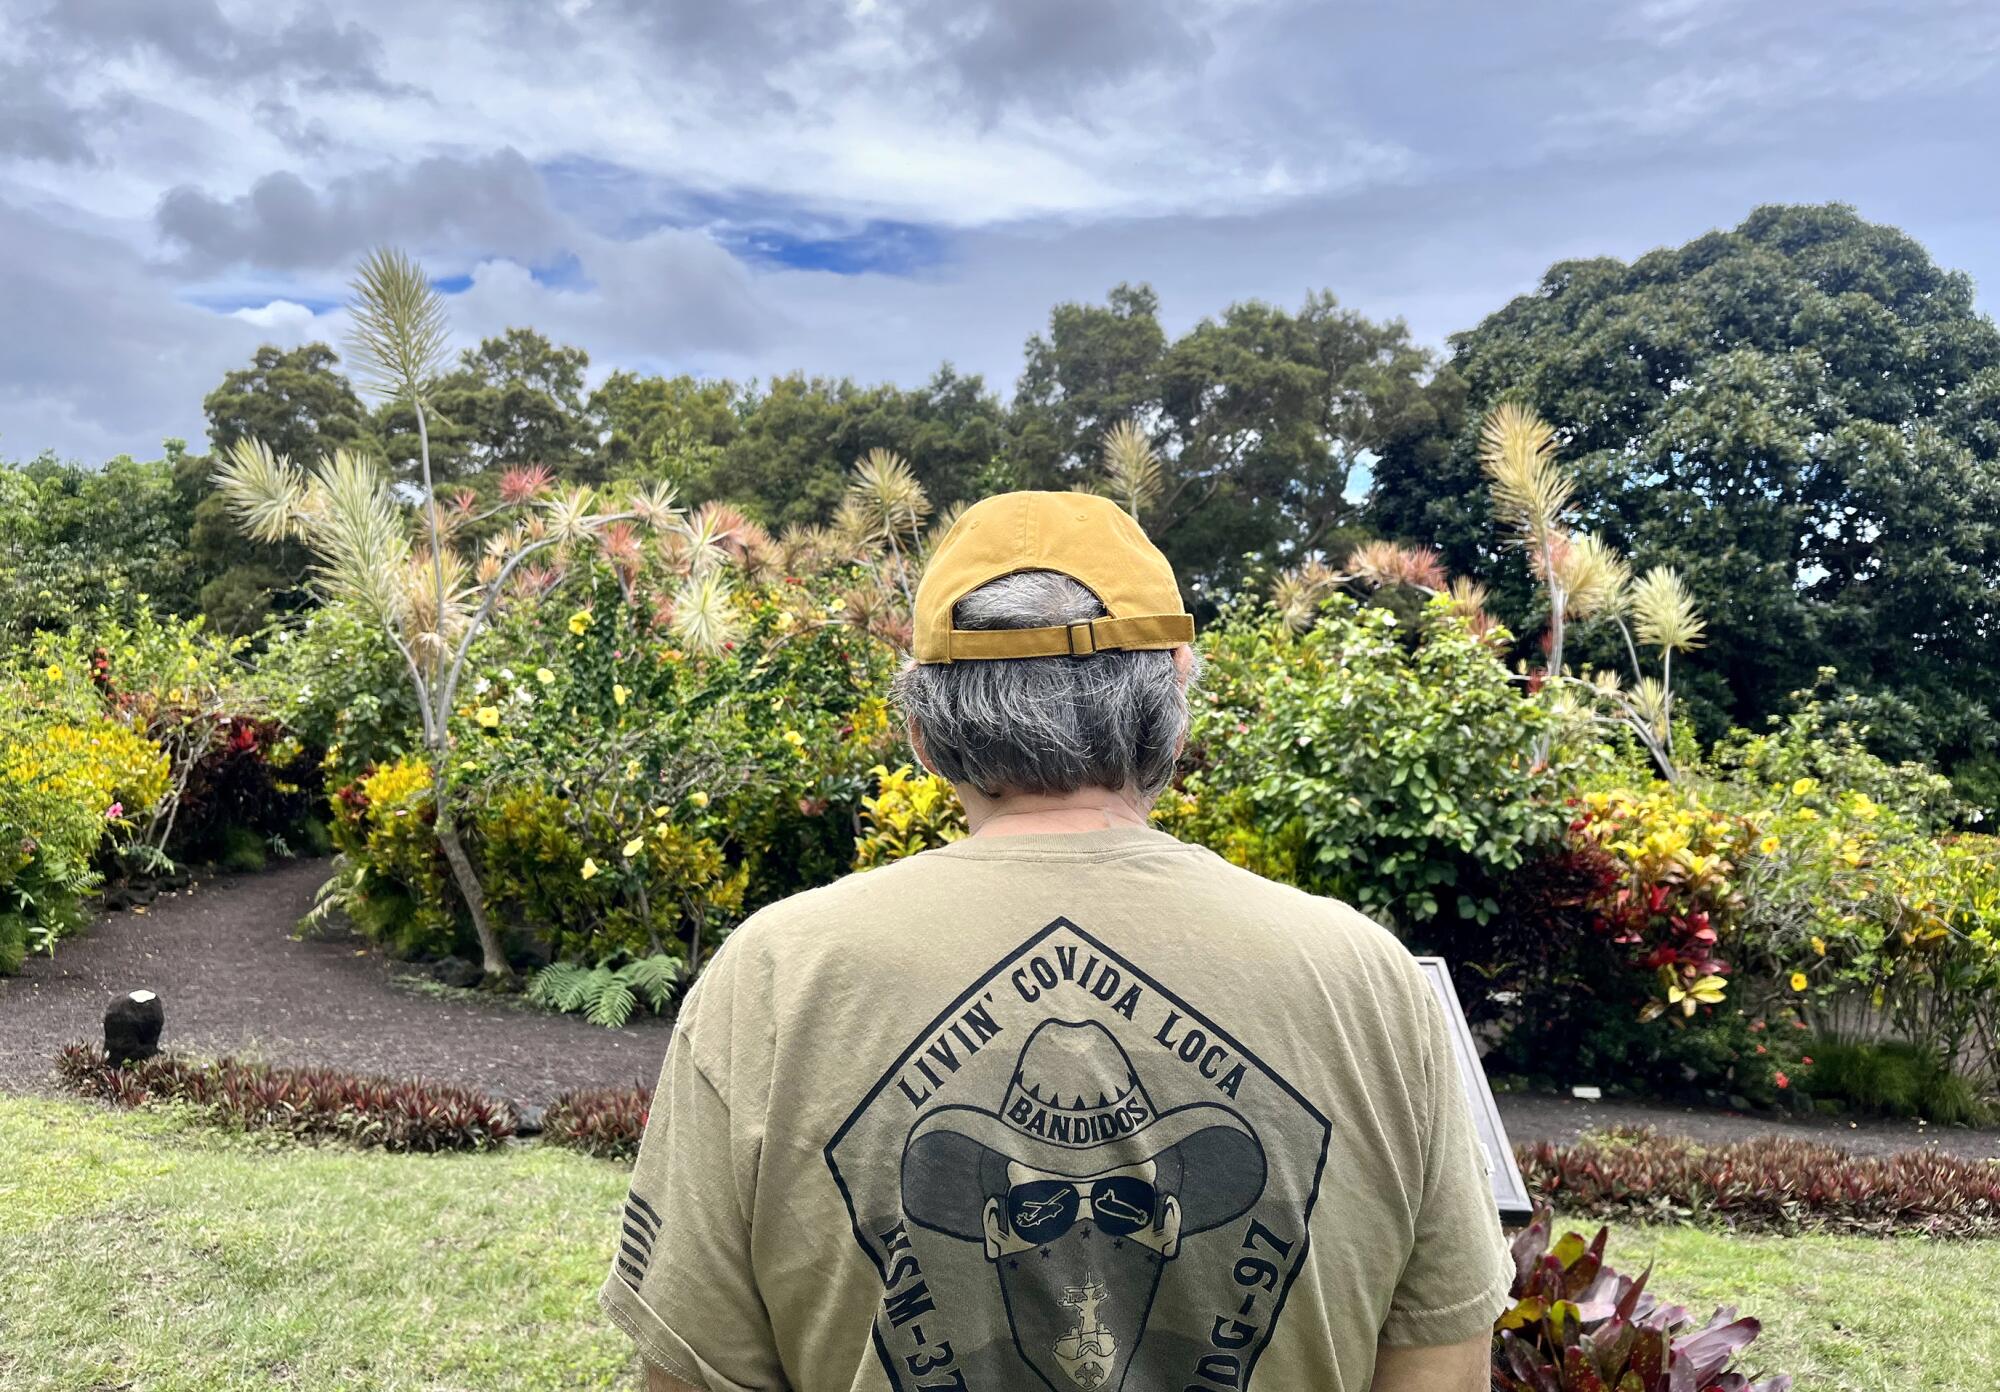 Jon Lomberg surveys the Galaxy Garden at Paleaku Gardens Peace Sanctuary in Captain Cook, Hawaii.